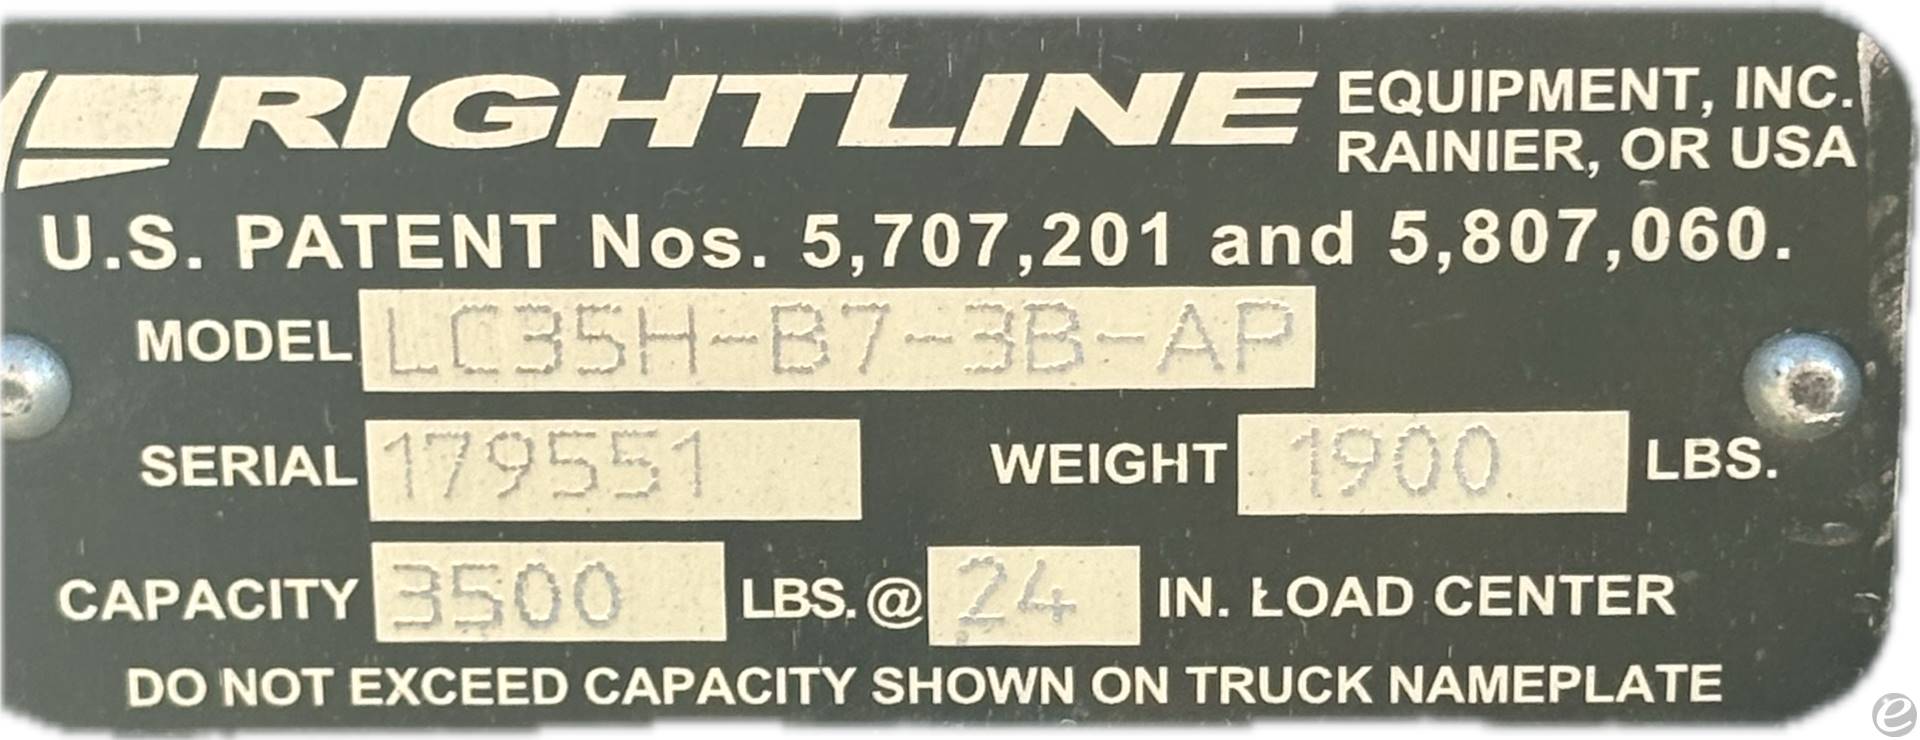 2017 Rightline LC35H - B7 - 3B - AP